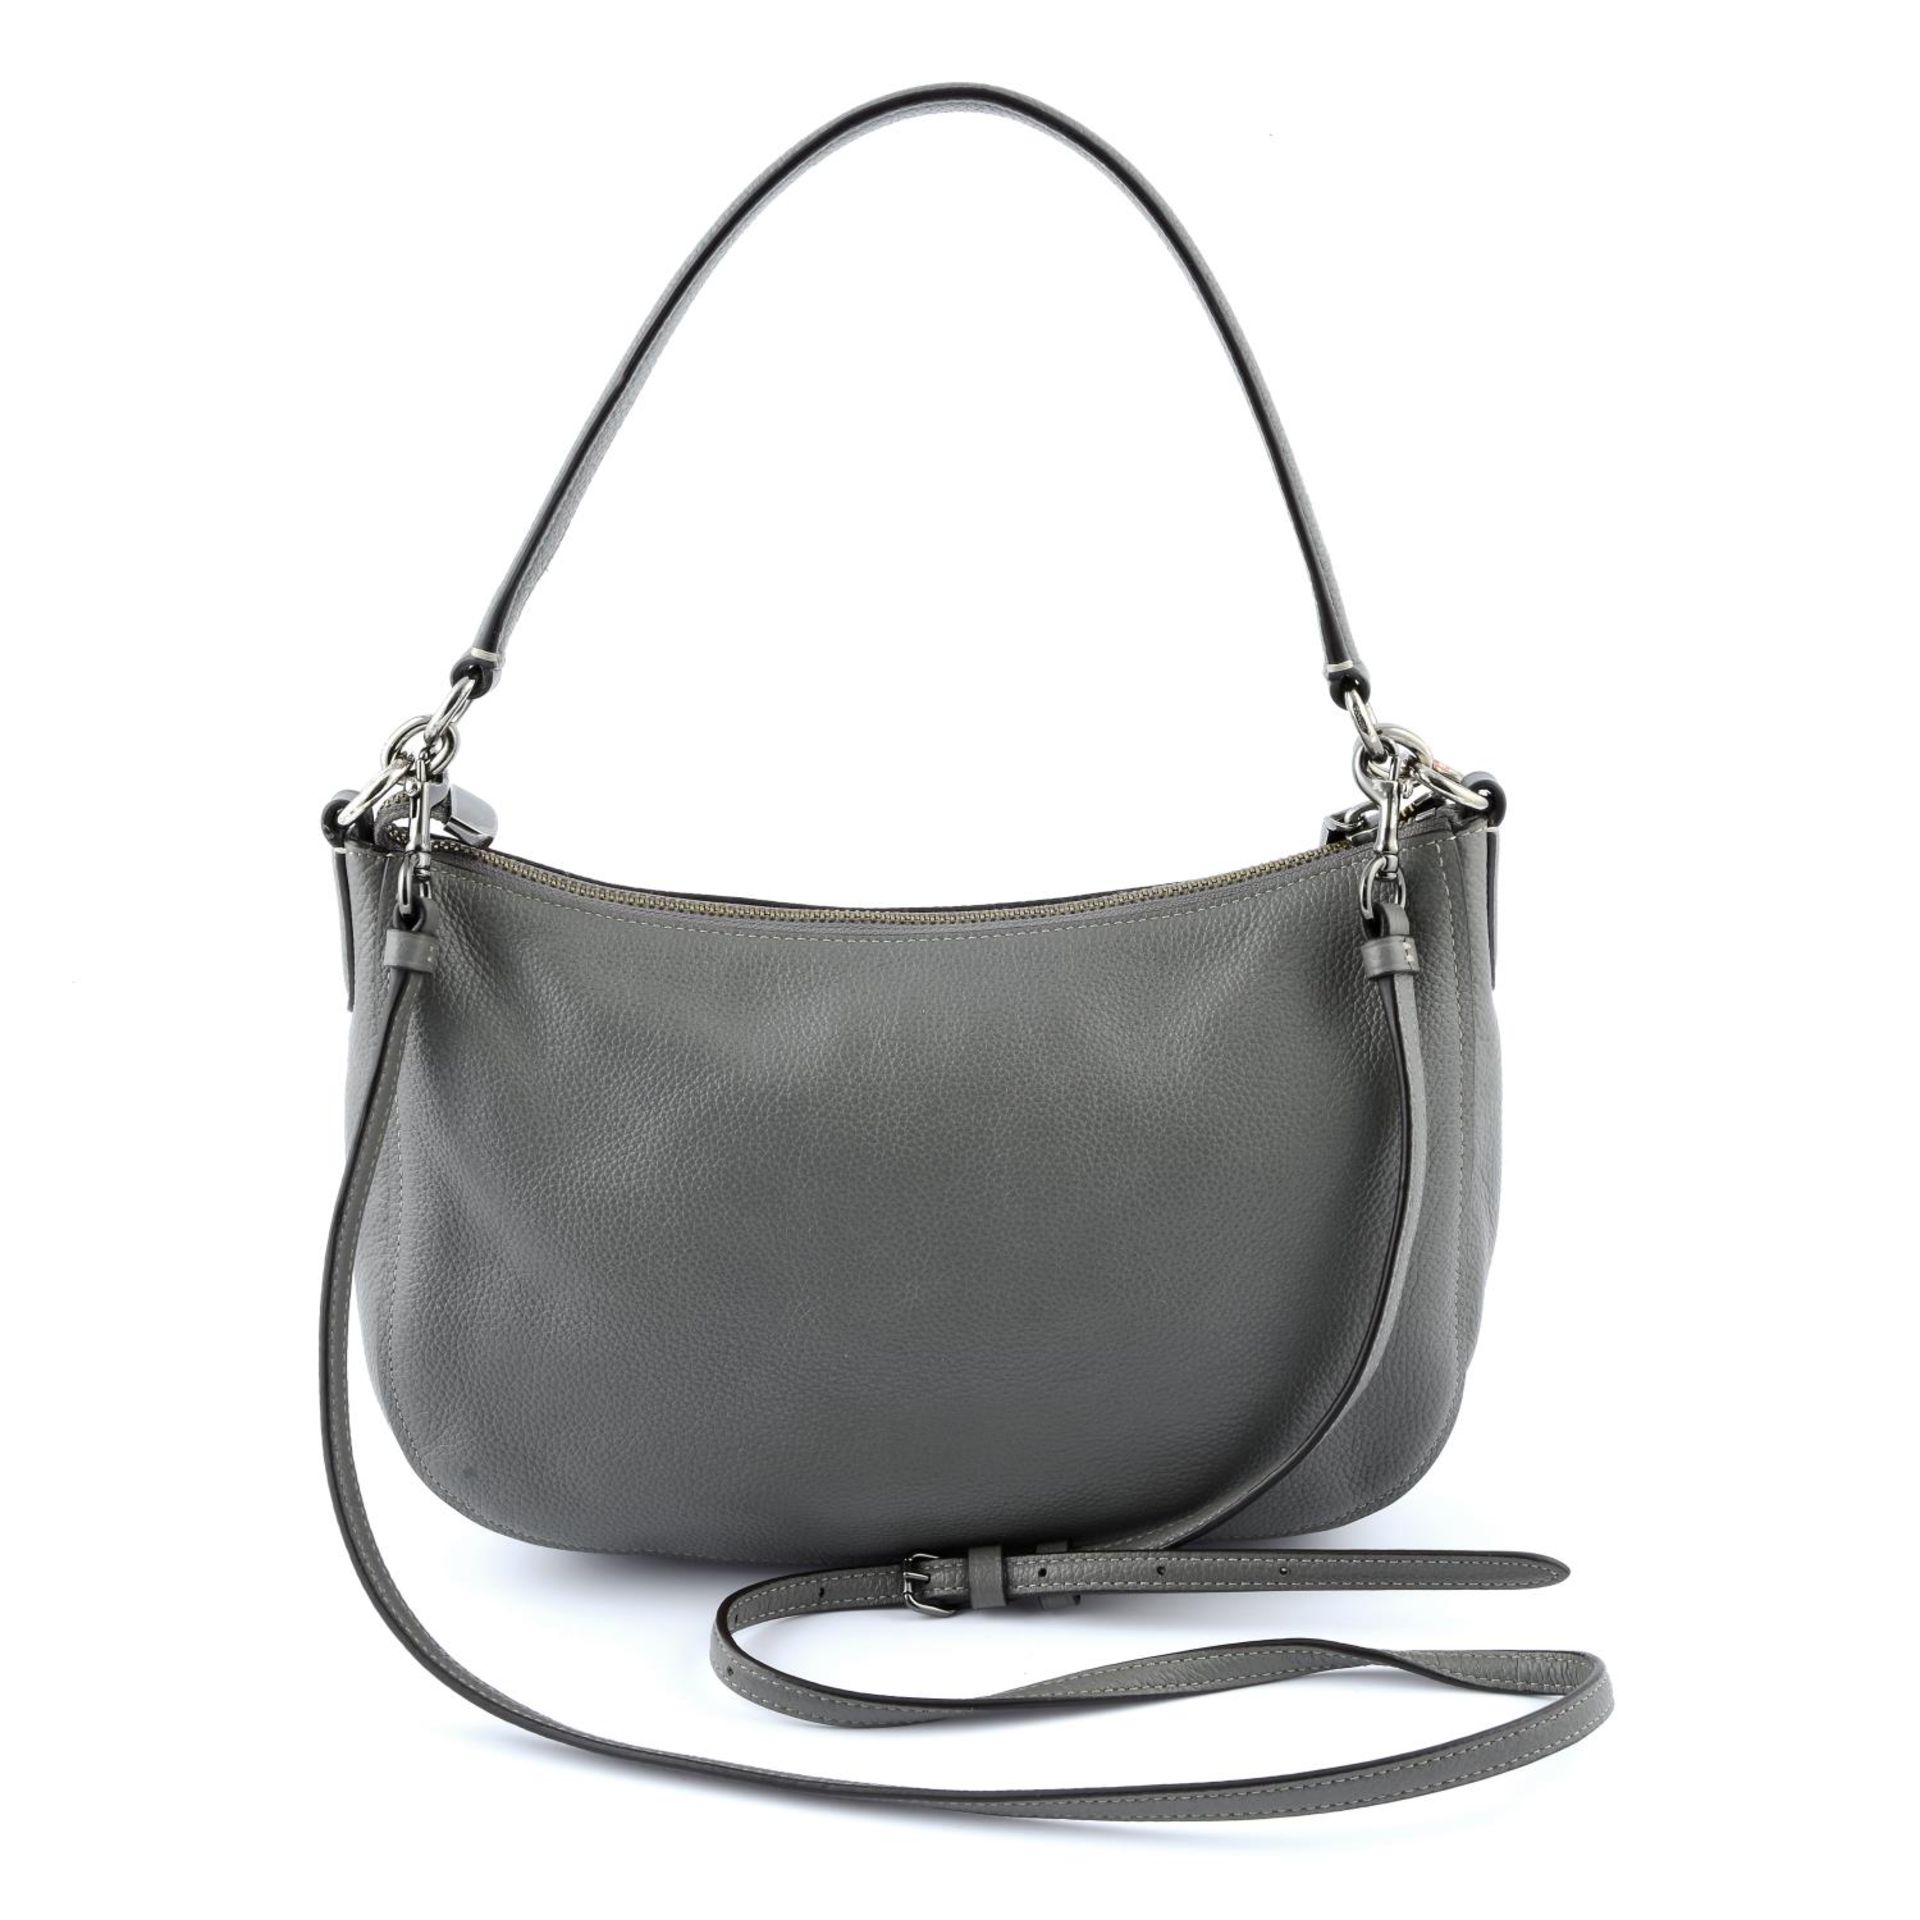 COACH - a grey leather handbag. - Image 2 of 5